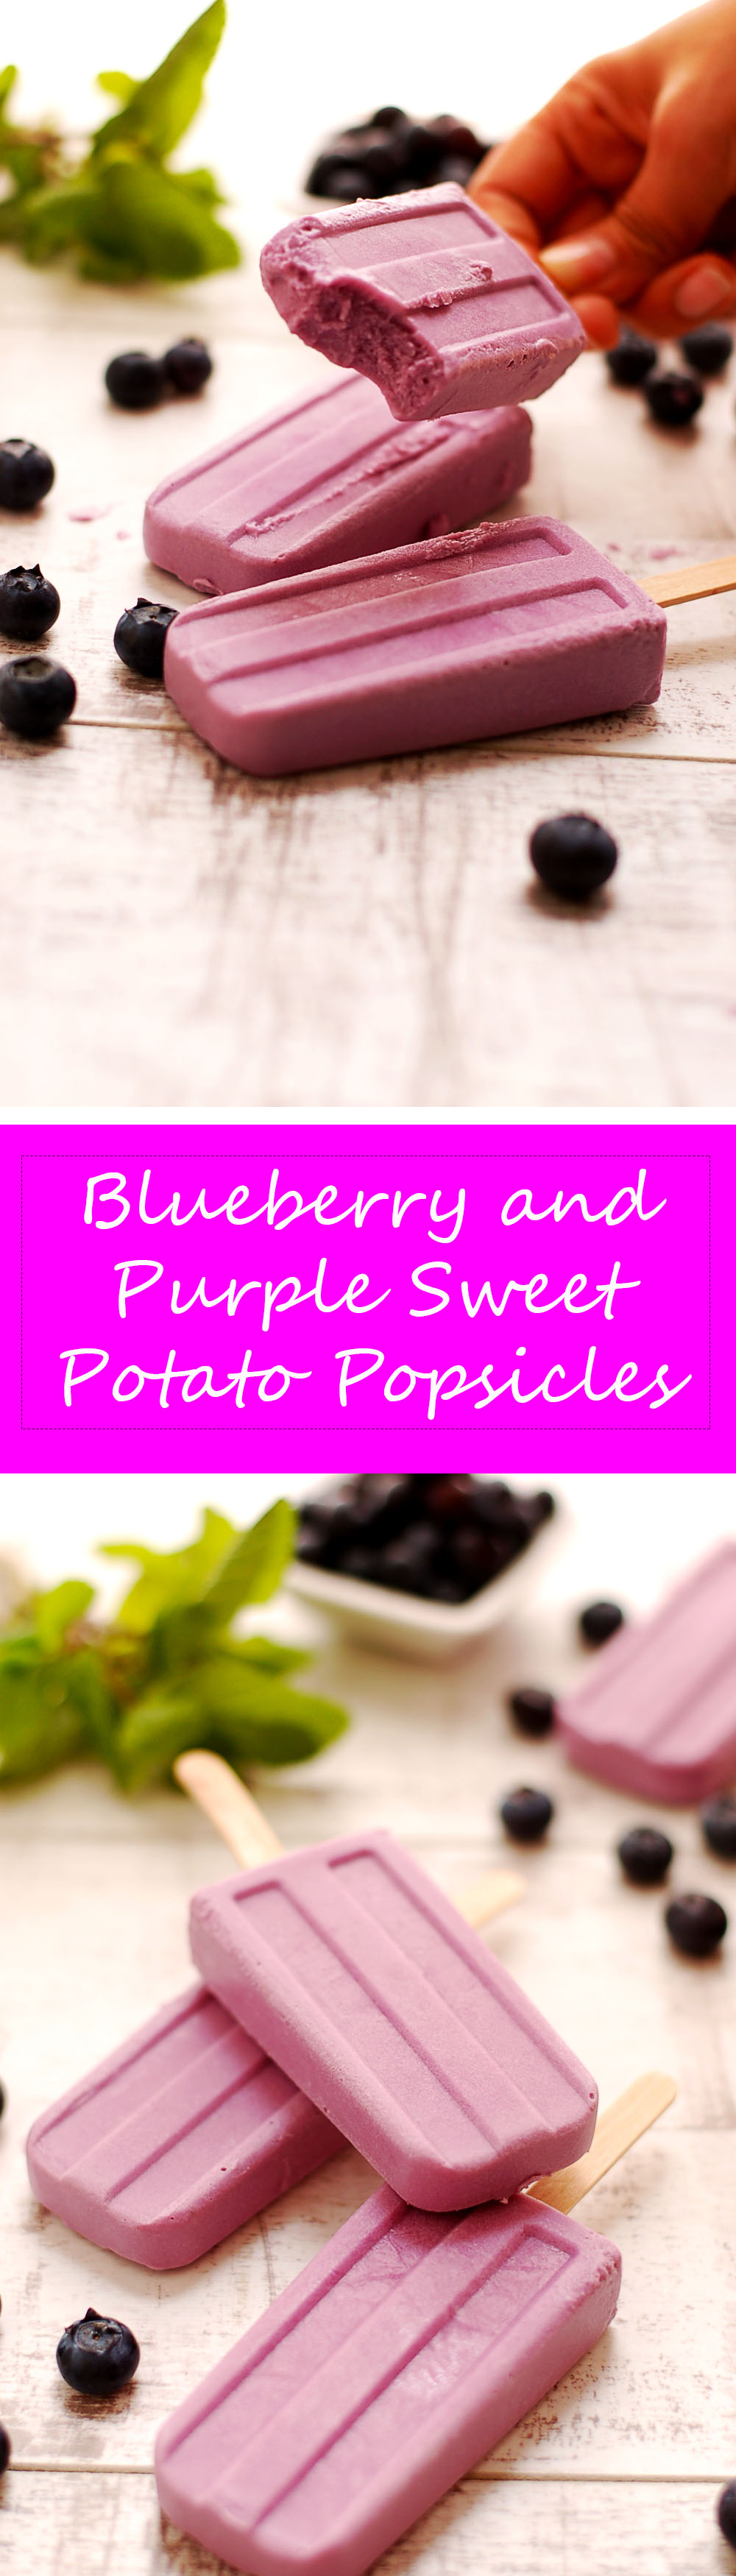 Blueberry and Purple Sweet Potato Vegan Popsicles!